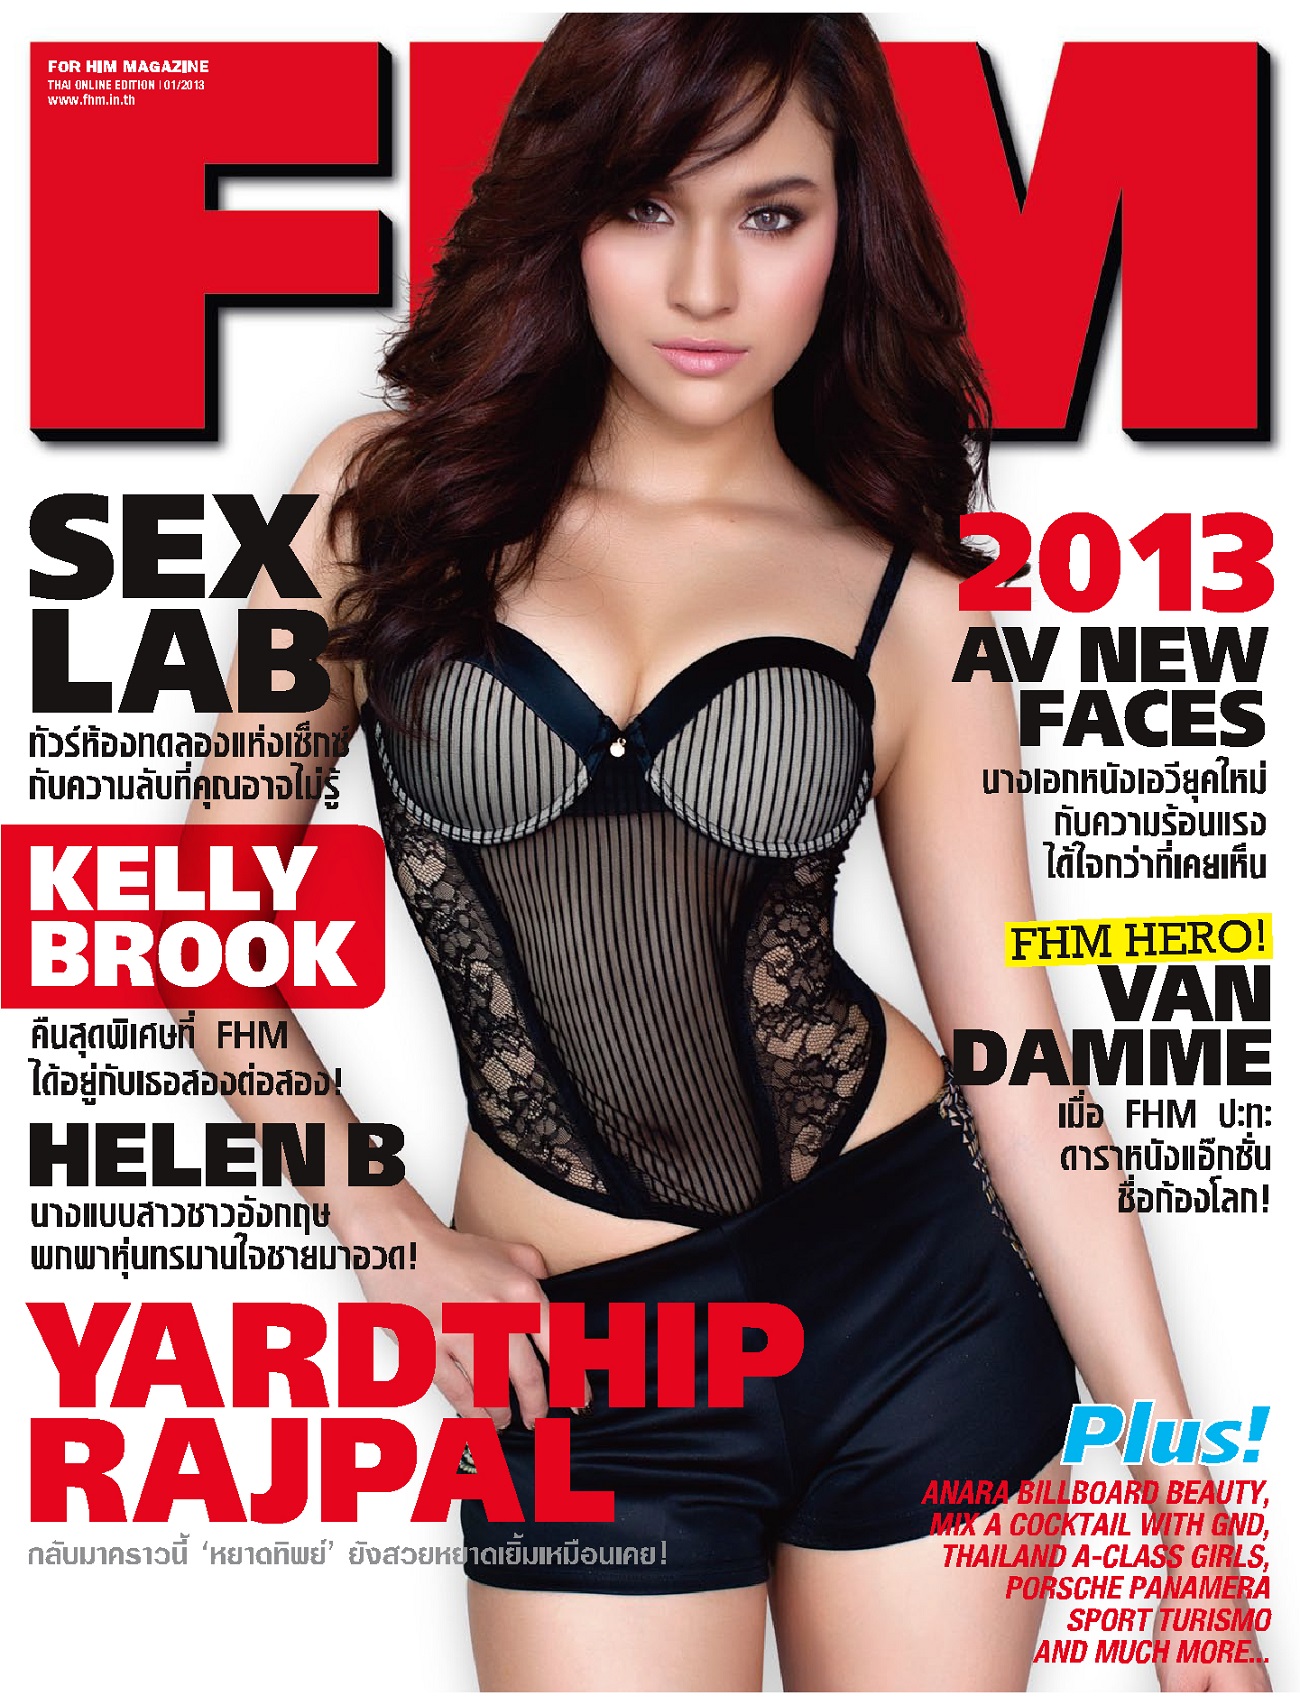 Yardthip Rajpal for FHM Magazine Thailand